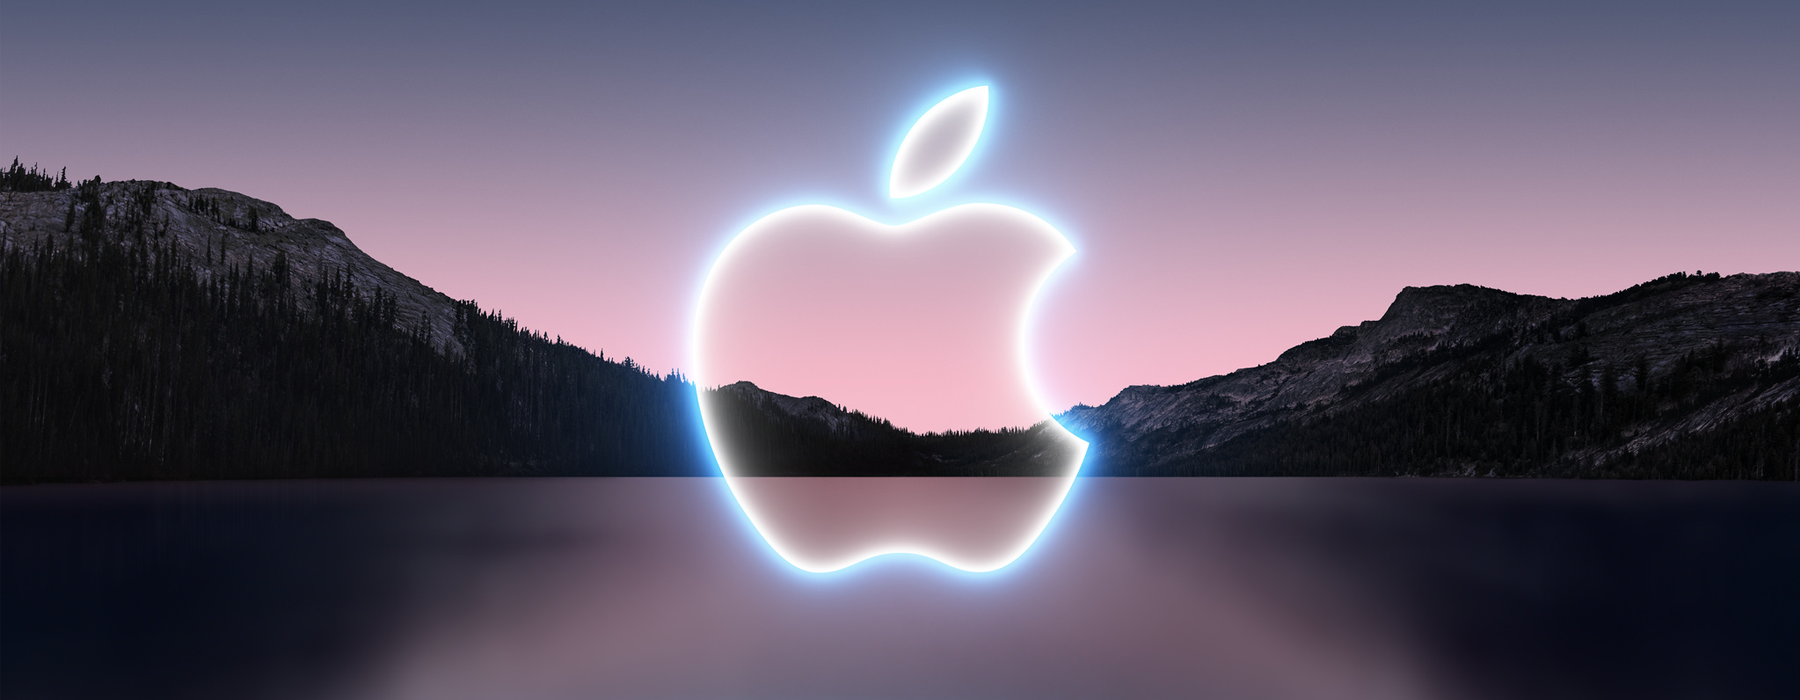 california streaming keynote apple septembre frenchmac